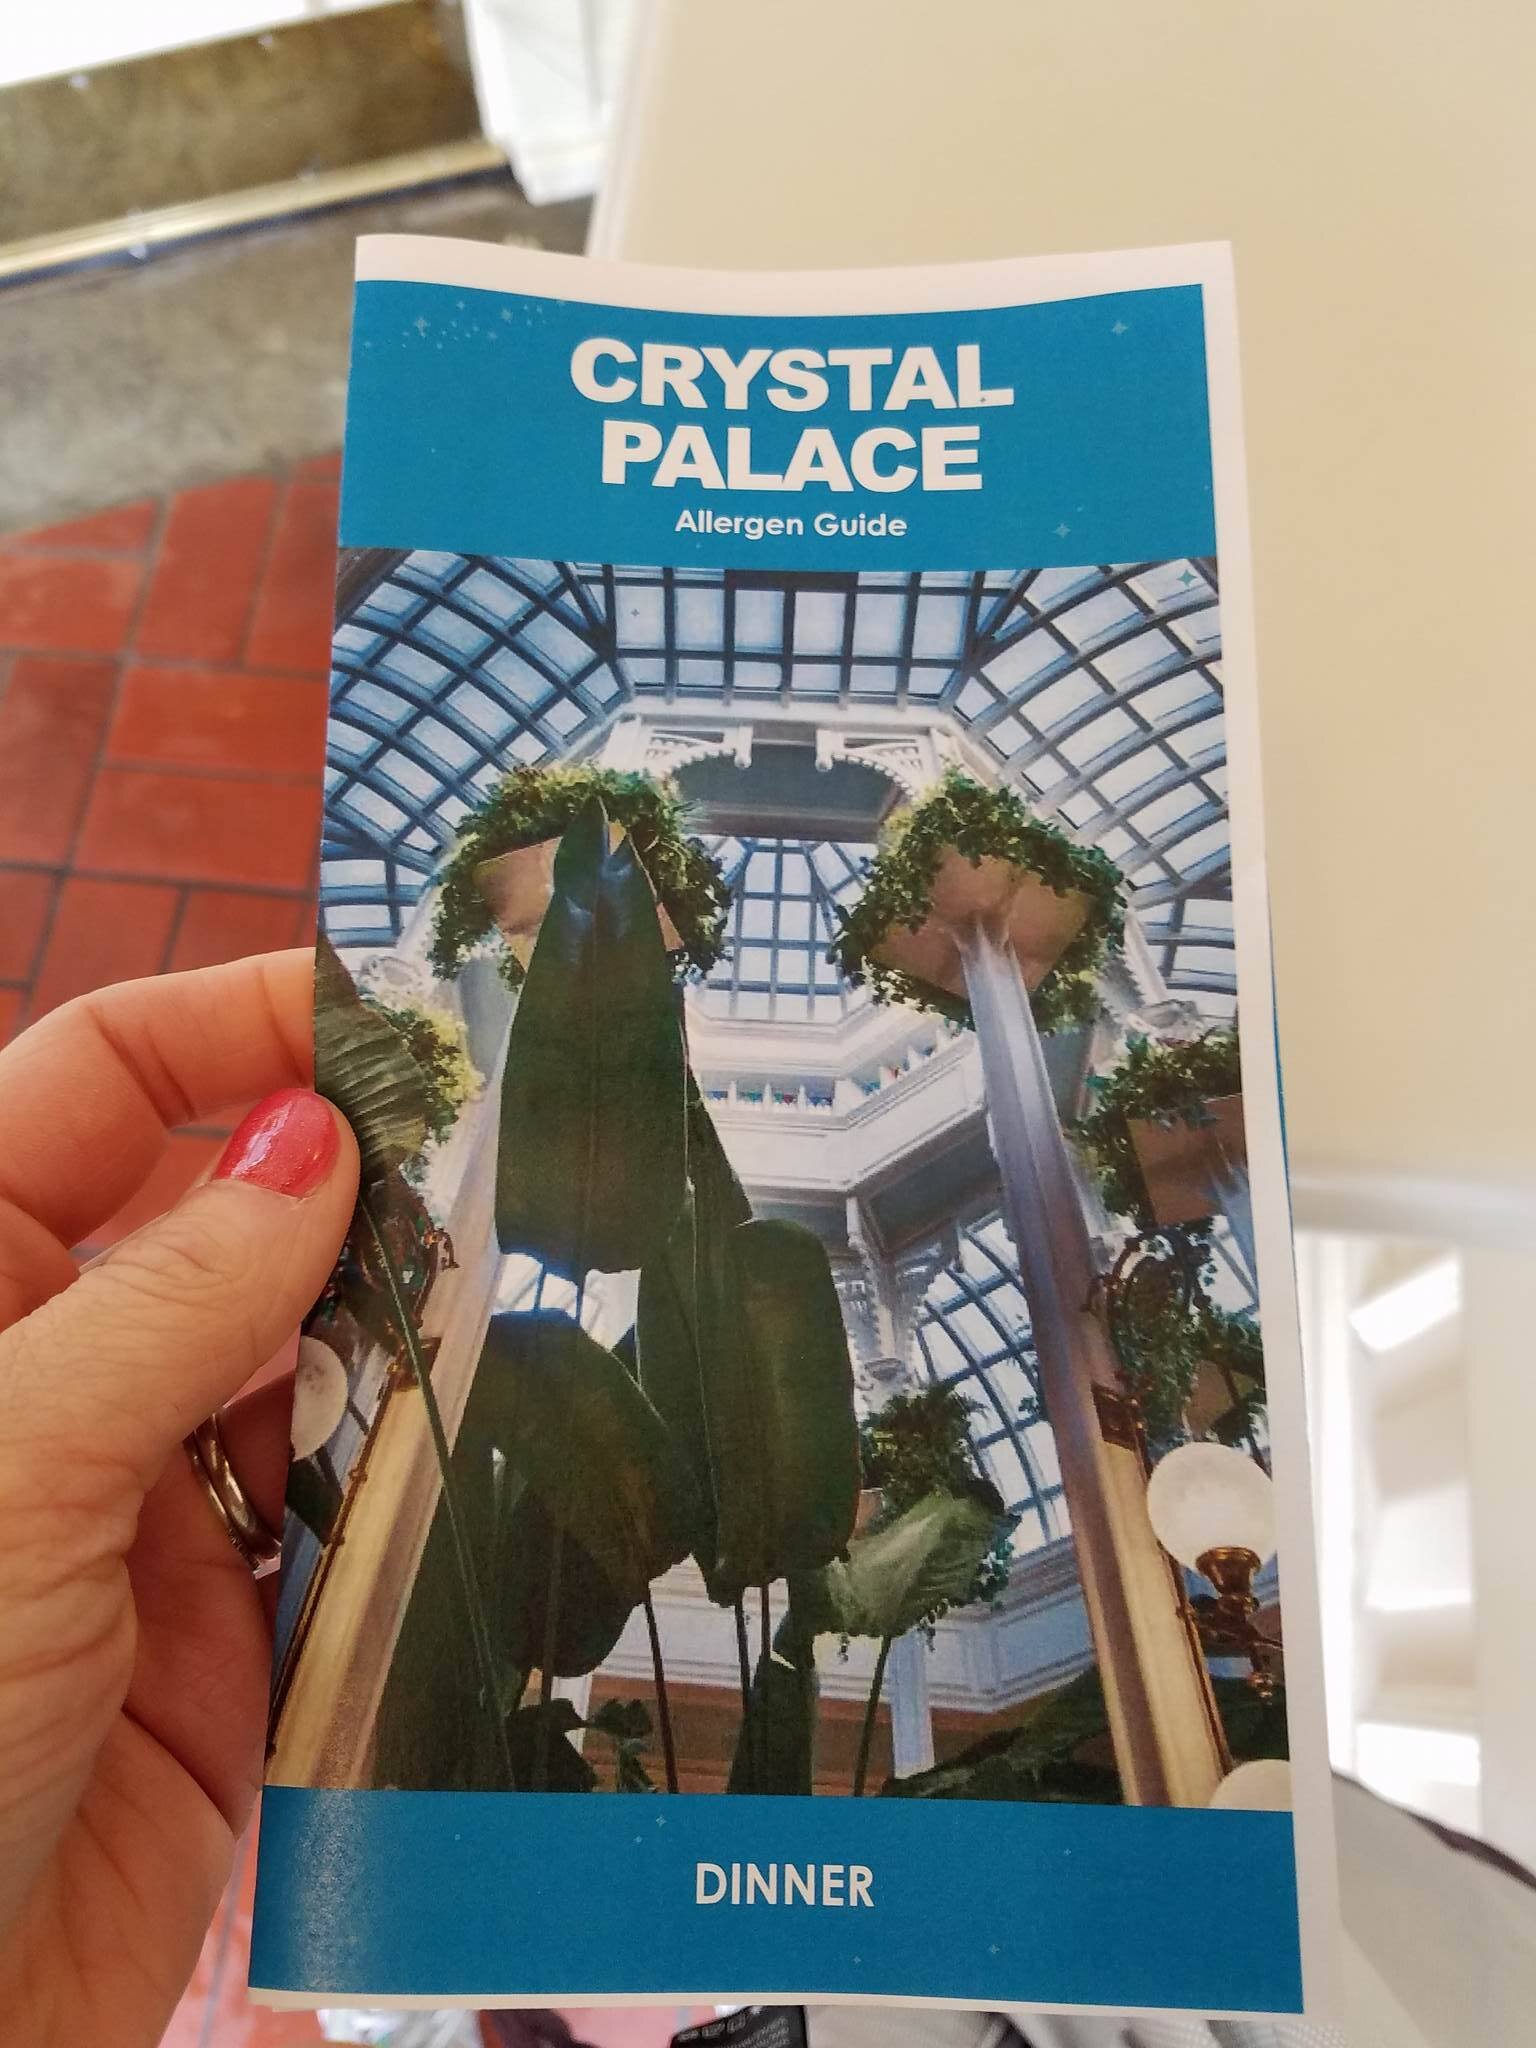 Crystal Palace Dinner Allergen Guide